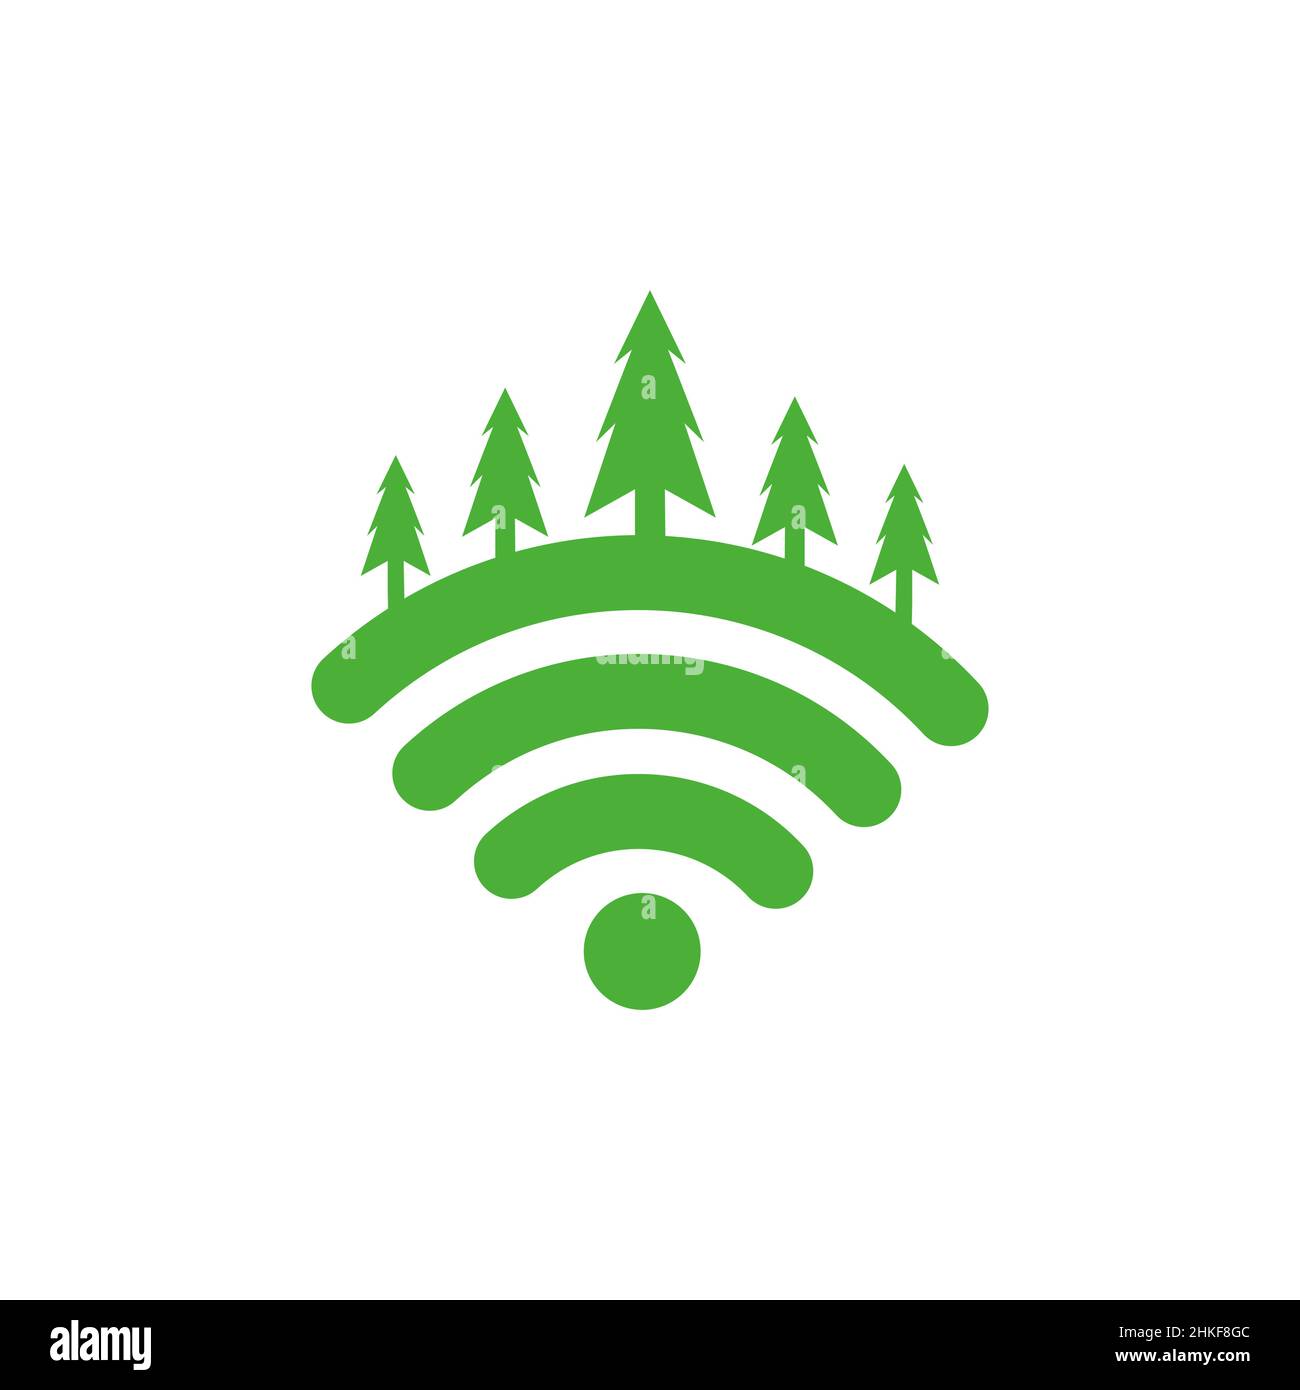 wifi internet with trees forest logo design, vector graphic symbol icon illustration creative idea Stock Vector